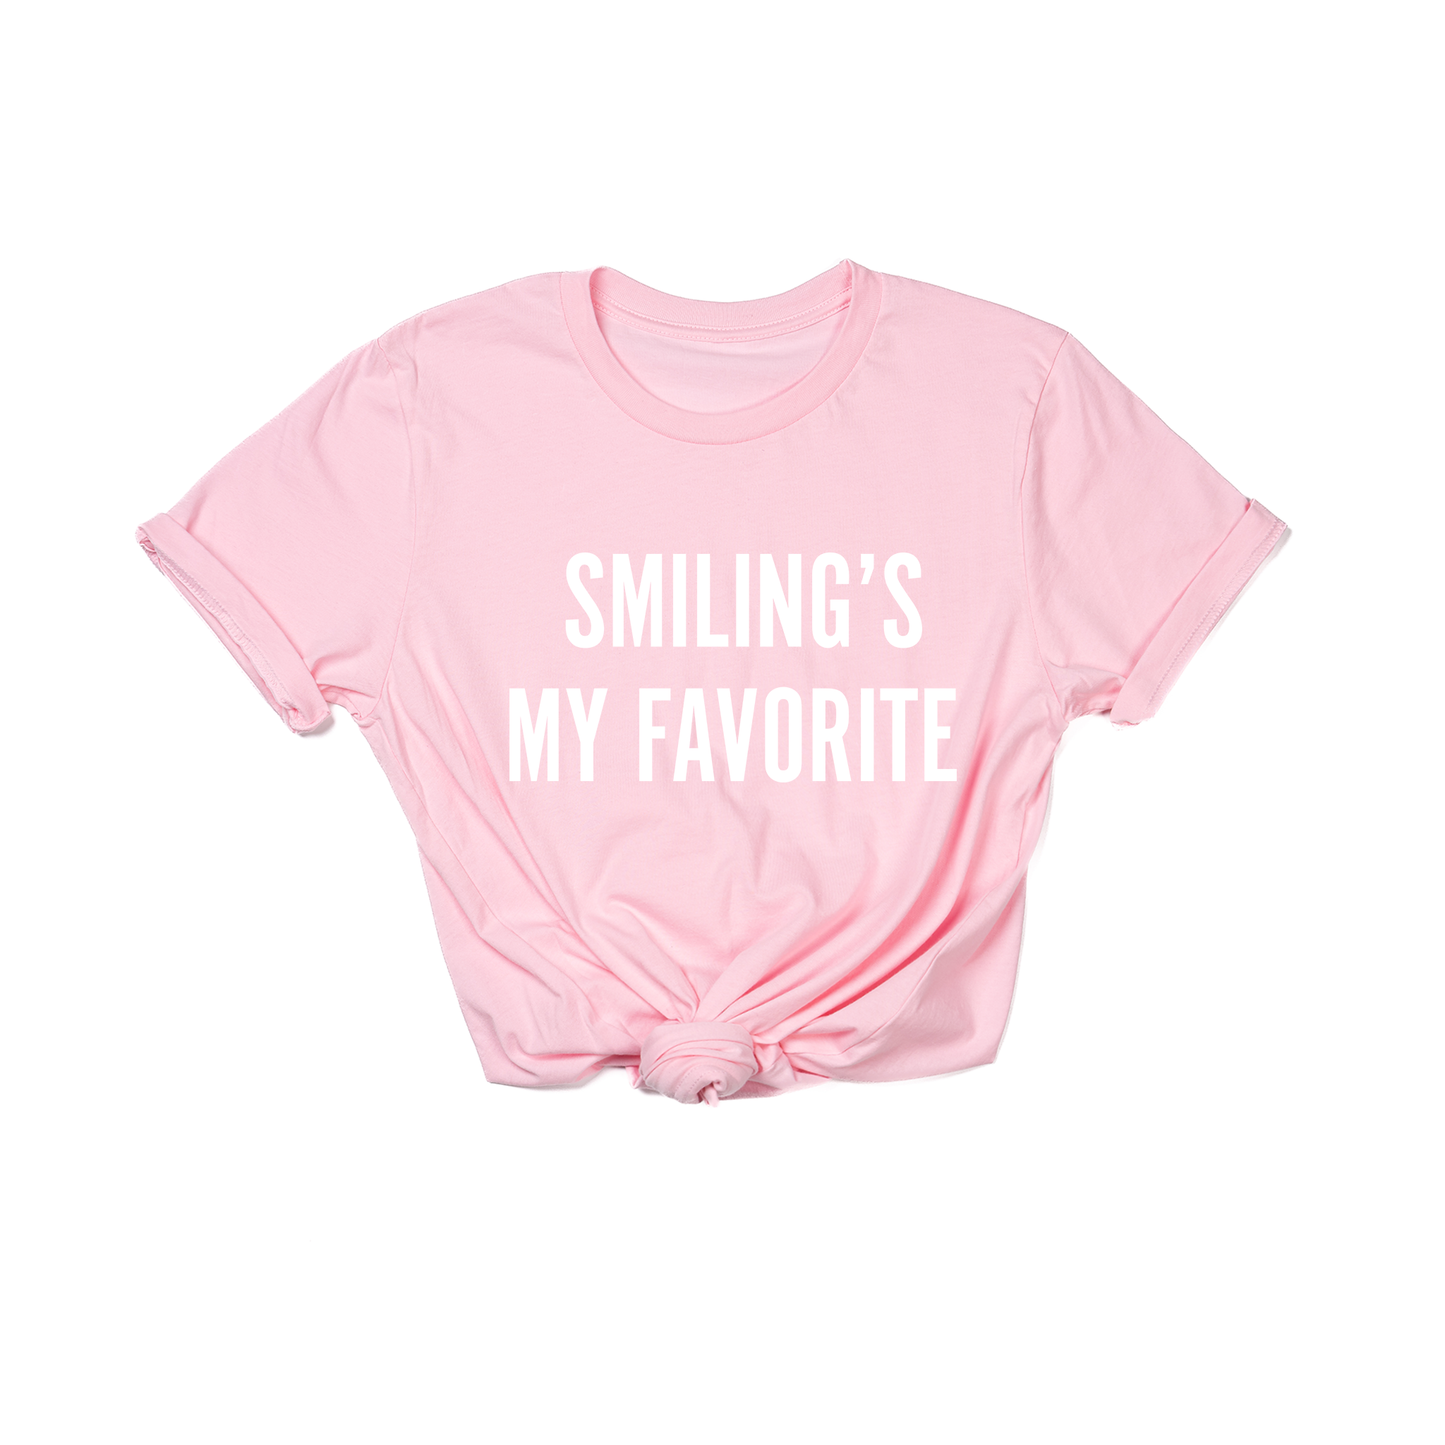 Smiling's My Favorite (White) - Tee (Pink)